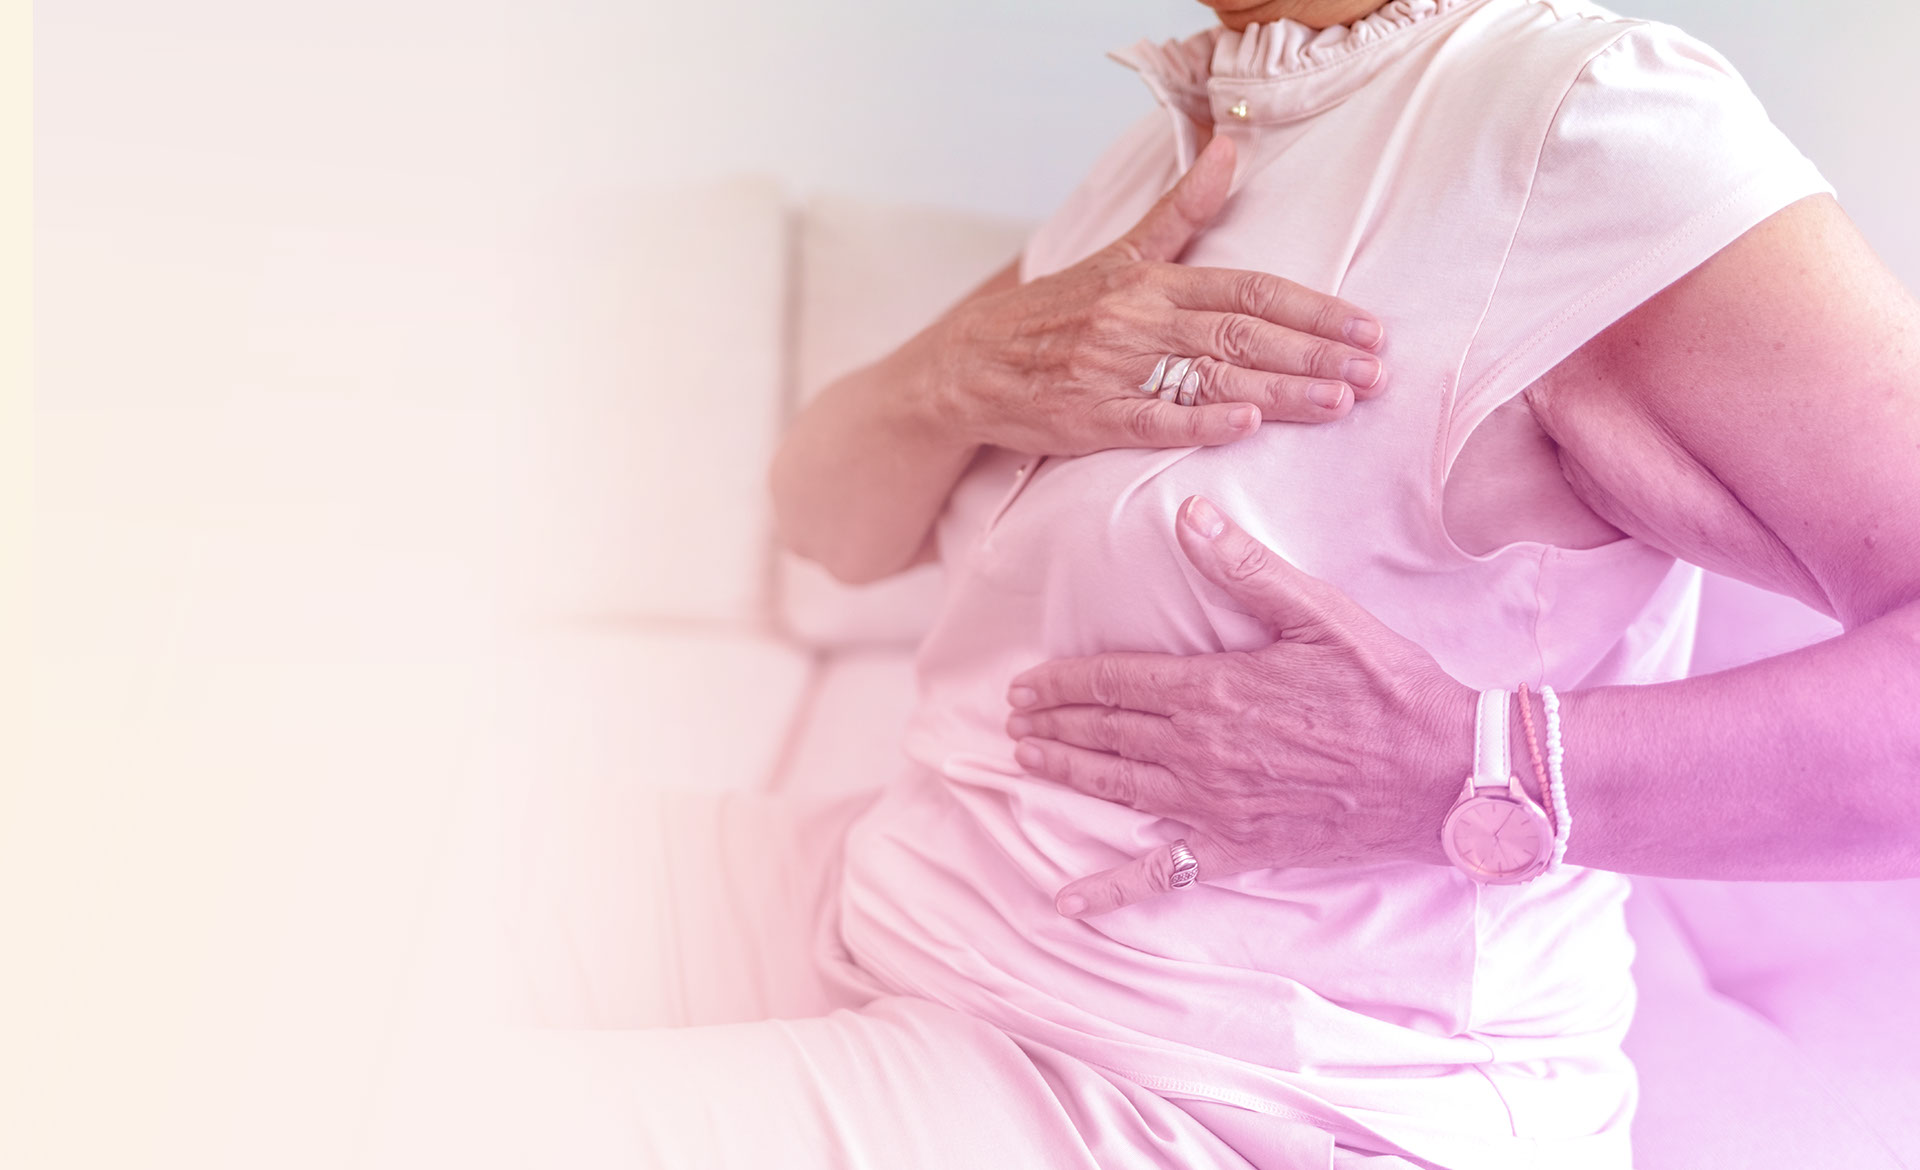 O que significa carcinoma invasivo na biópsia de mama?